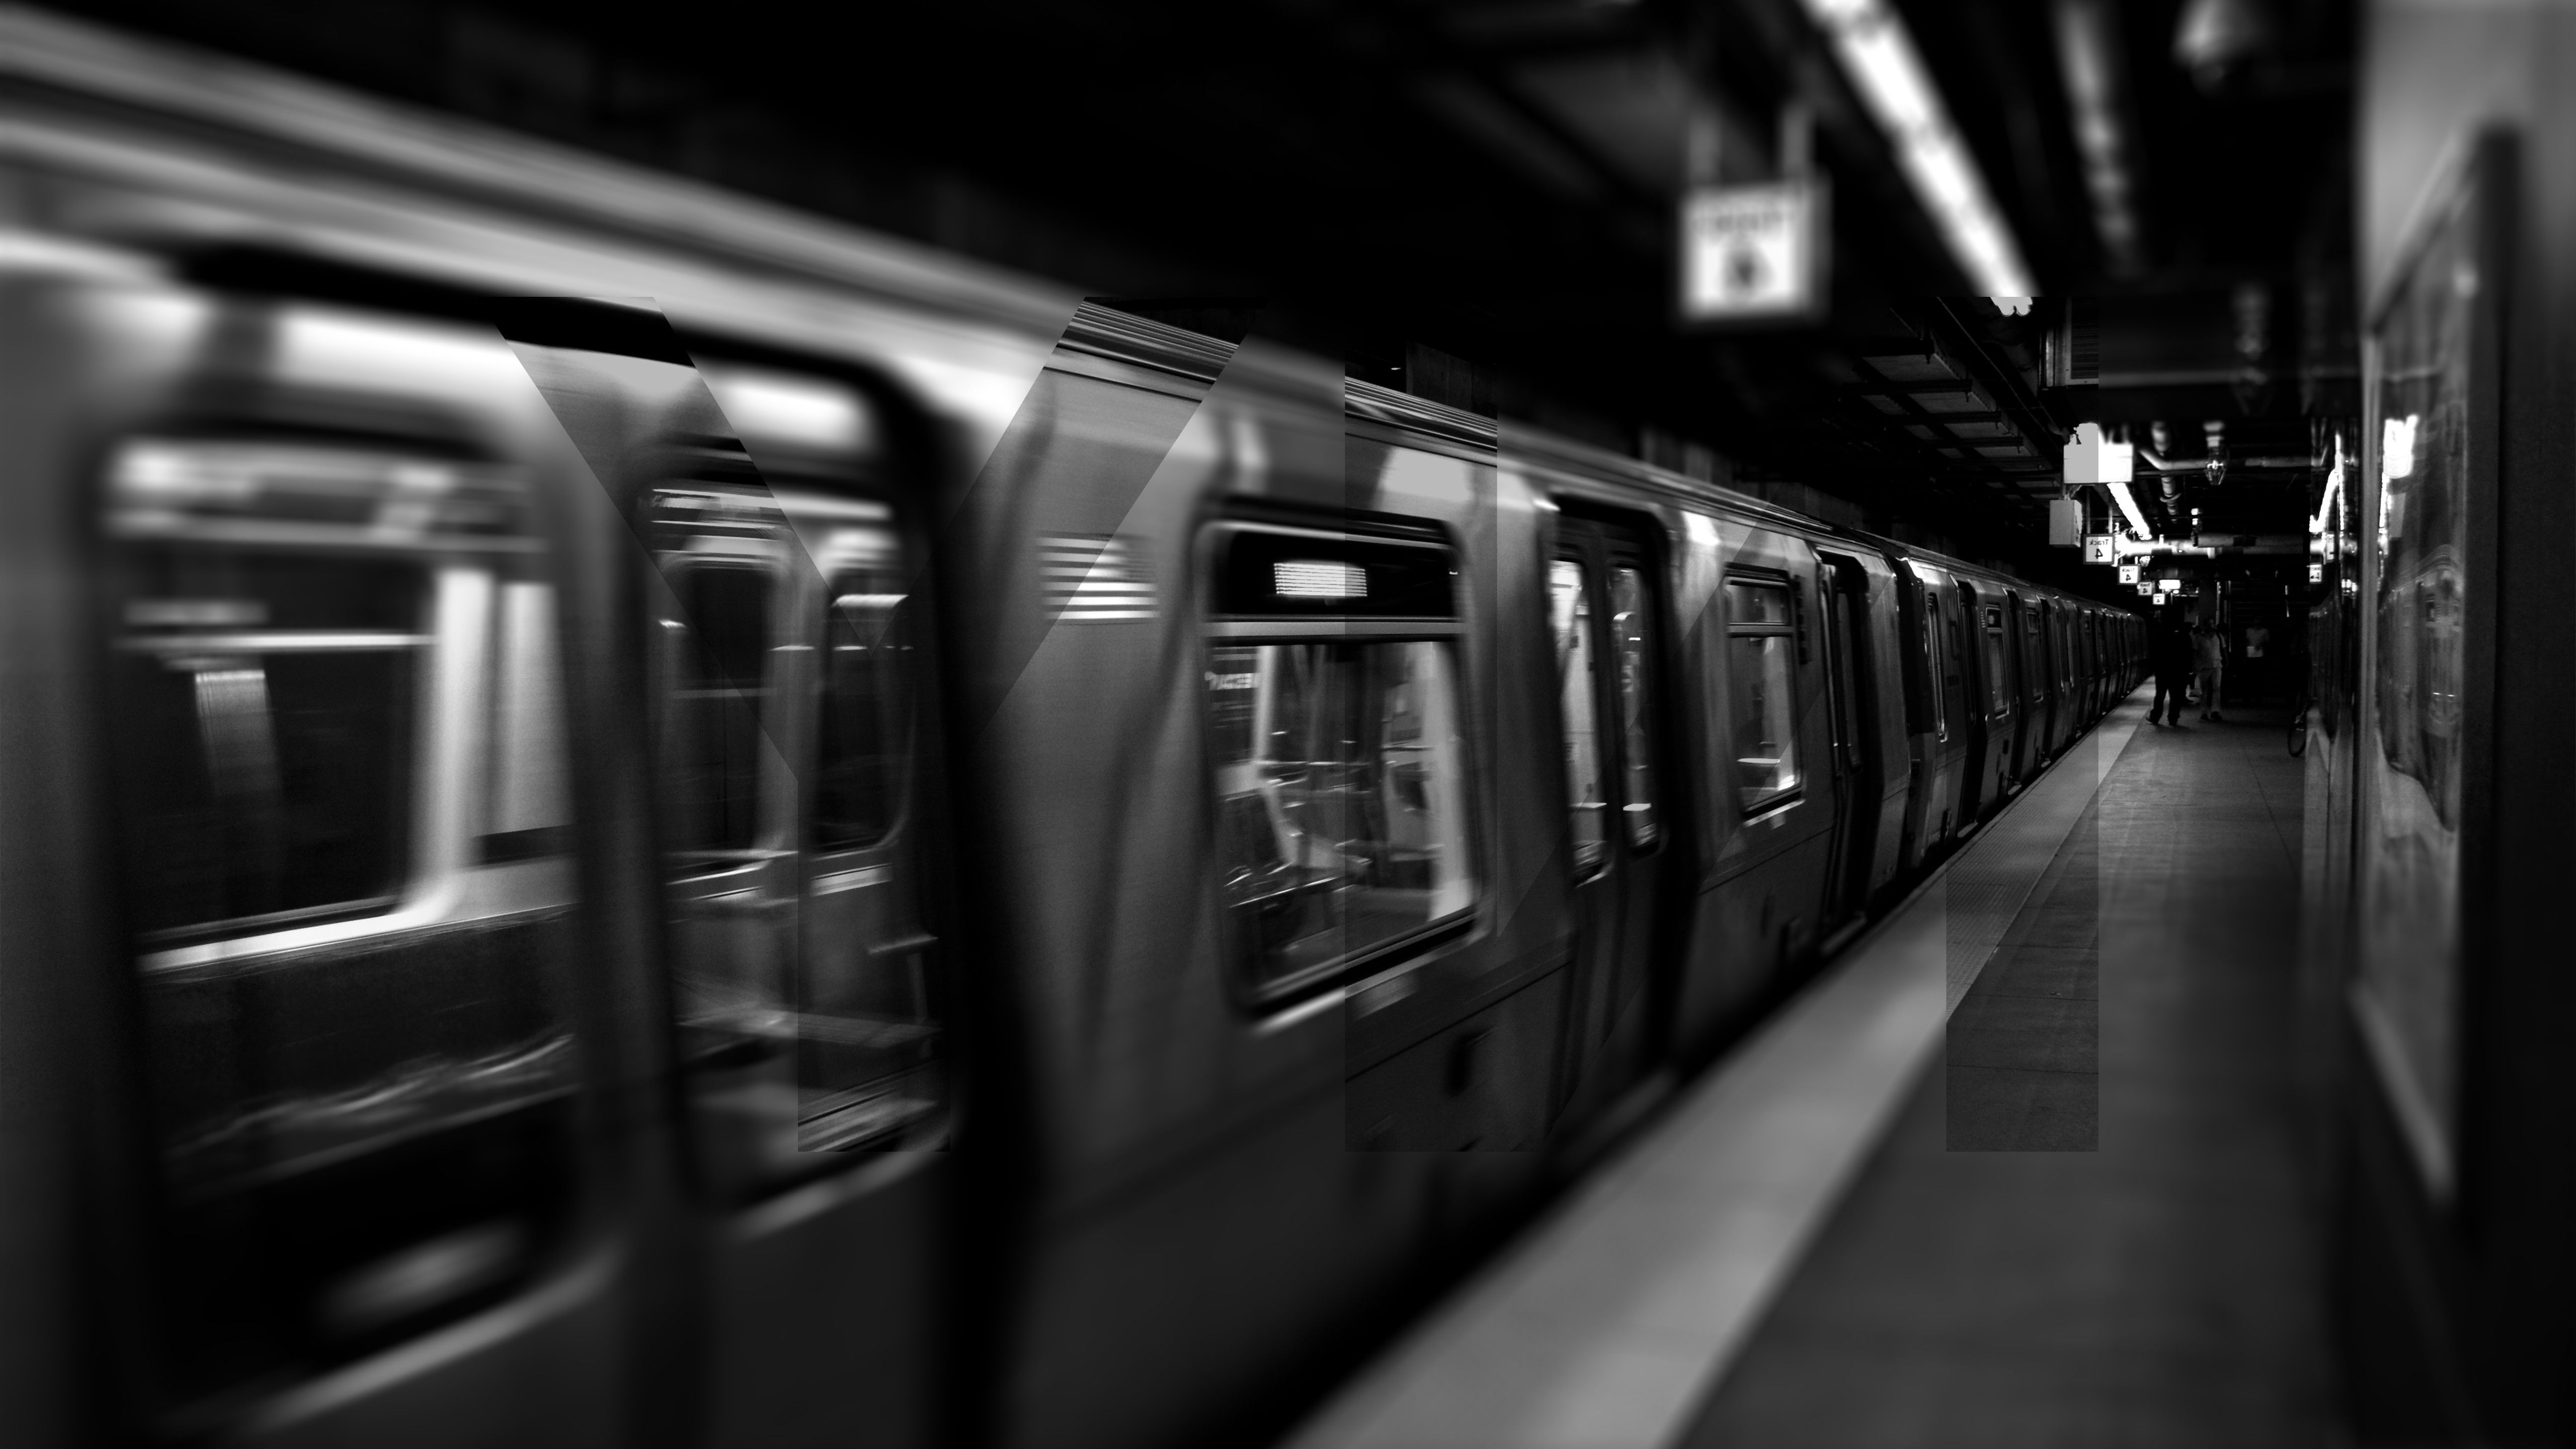 New York City Underground Subway Train, HD World, 4k Wallpaper, Image, Background, Photo and Picture